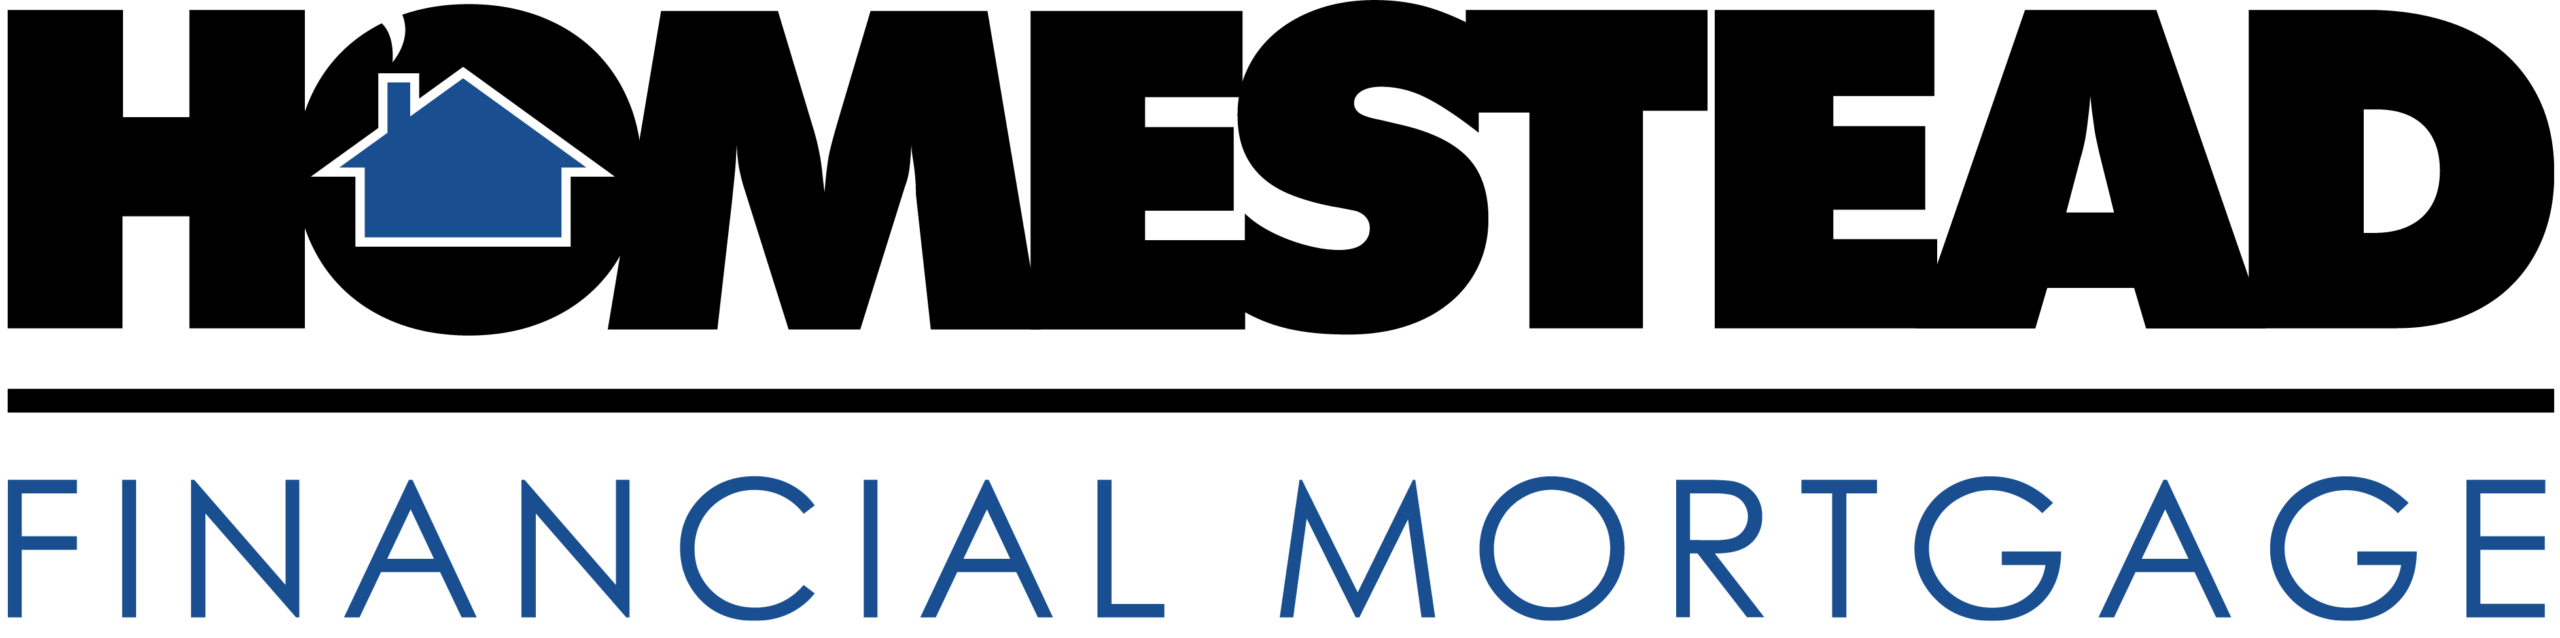 Homestead Financial Mortgage Logo